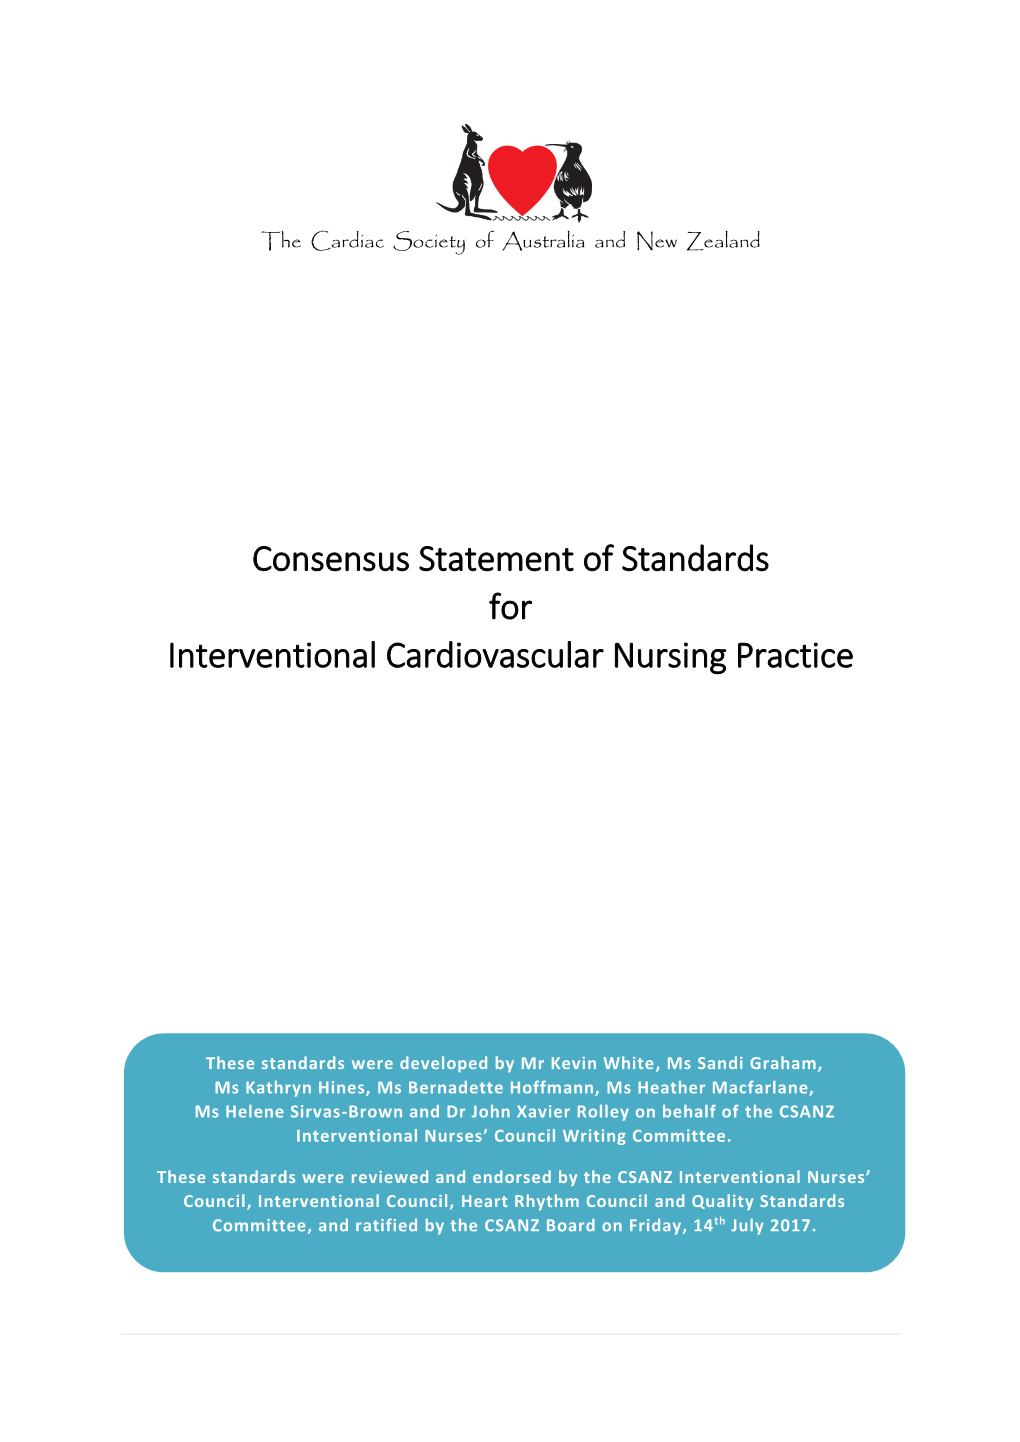 Consensus Statement of Standards for Interventional Cardiovascular Nursing Practice 5